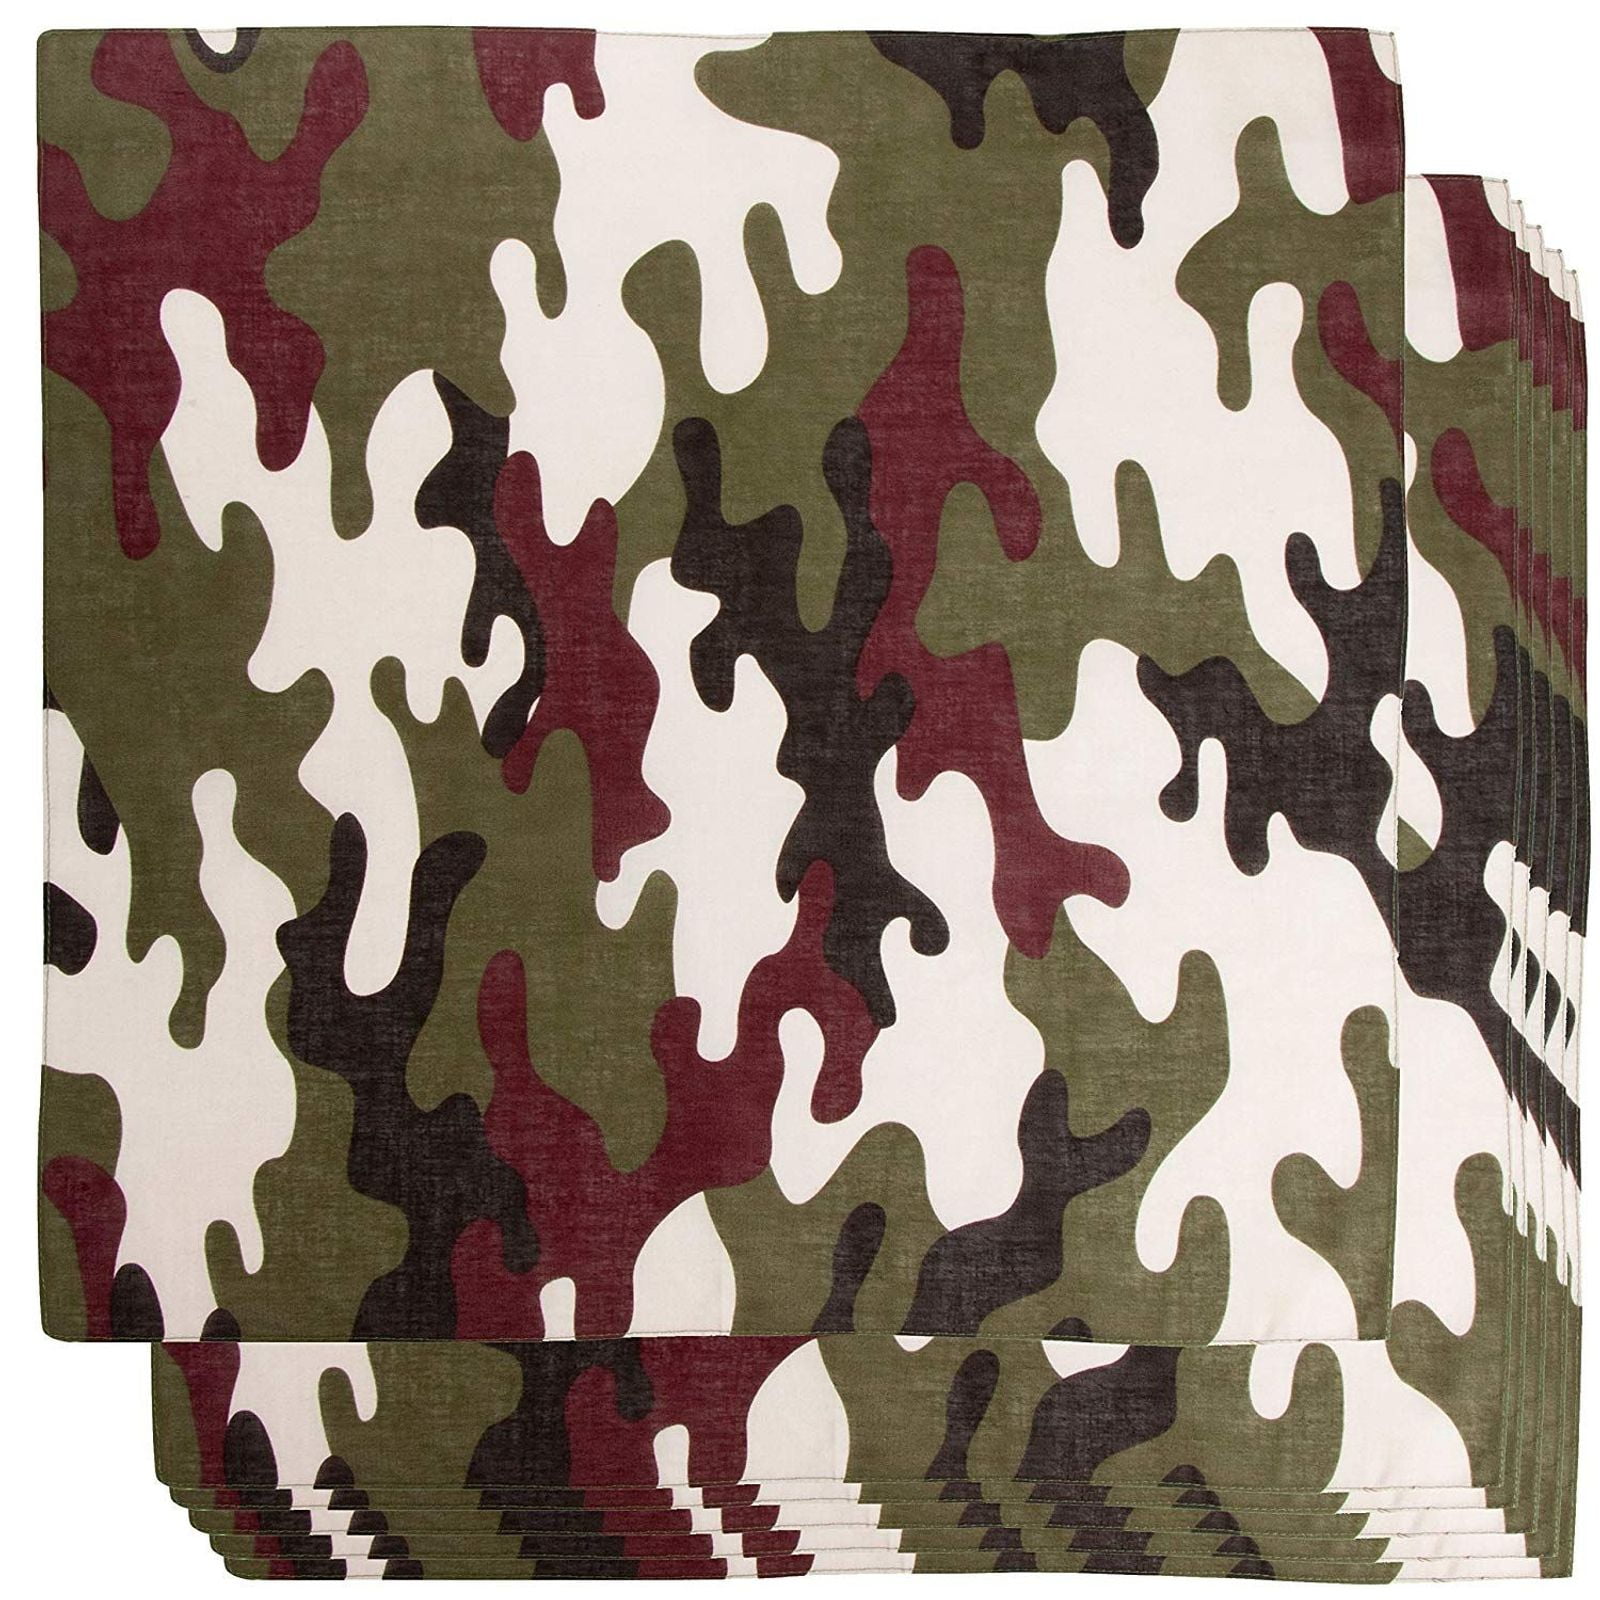 Plain Camouflage Cotton Bandanas Flags Accessory,Gear 21"x21",High Quality 